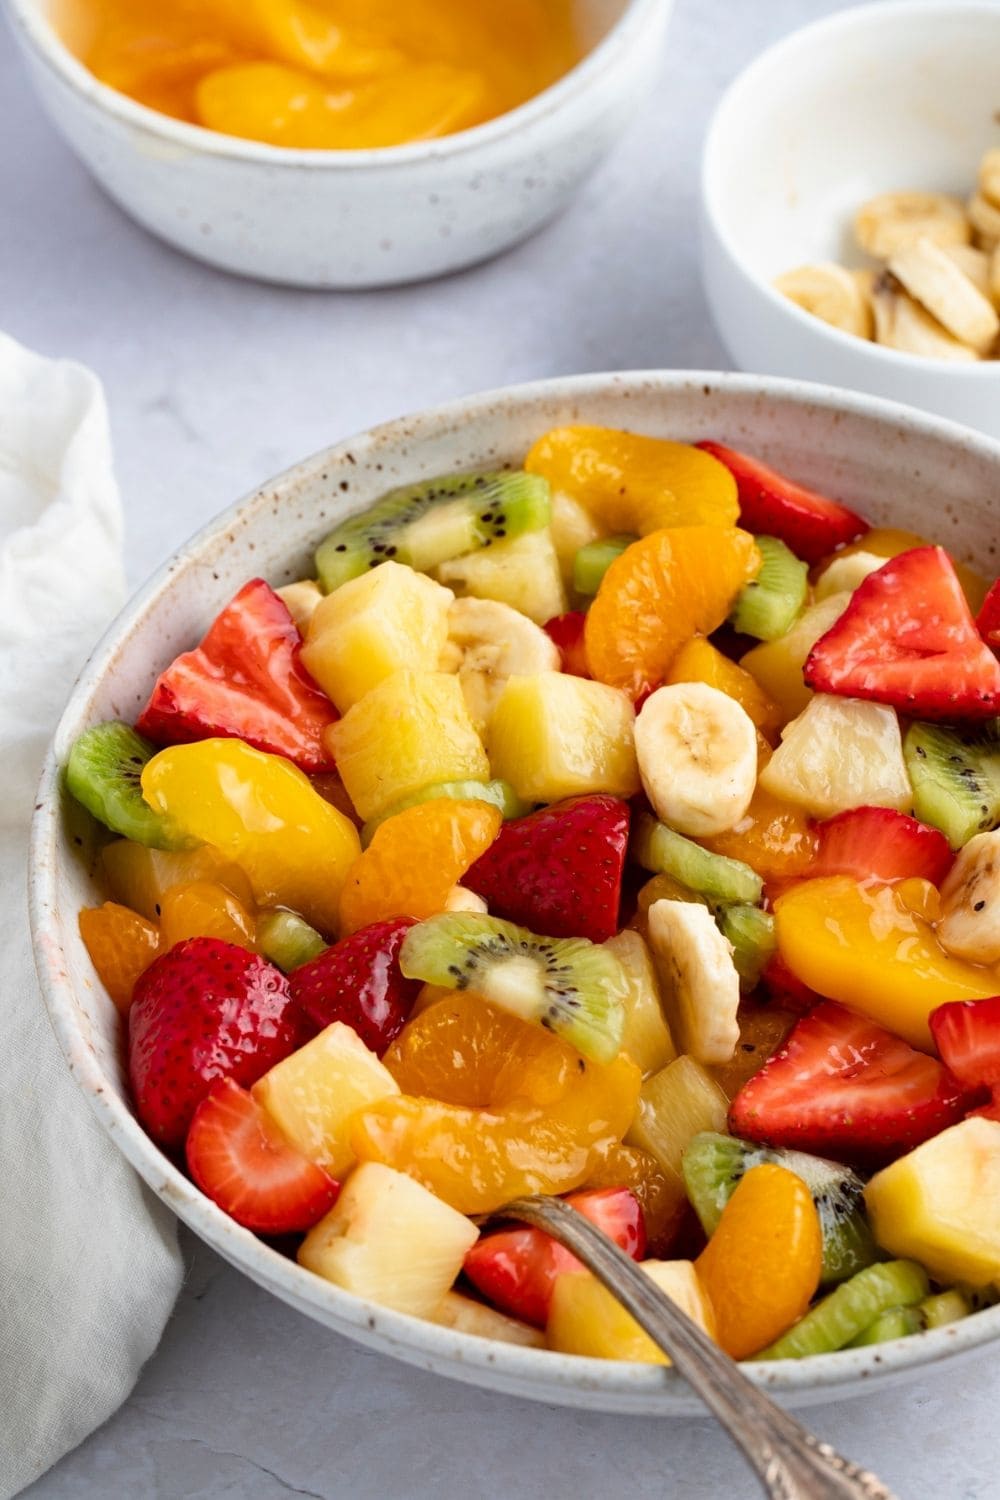 Bowl of Fruit Salad with Bowl of Fruit Salad with mix chopped strawberries, kiwi, peach, pineapple, oranges and bananas